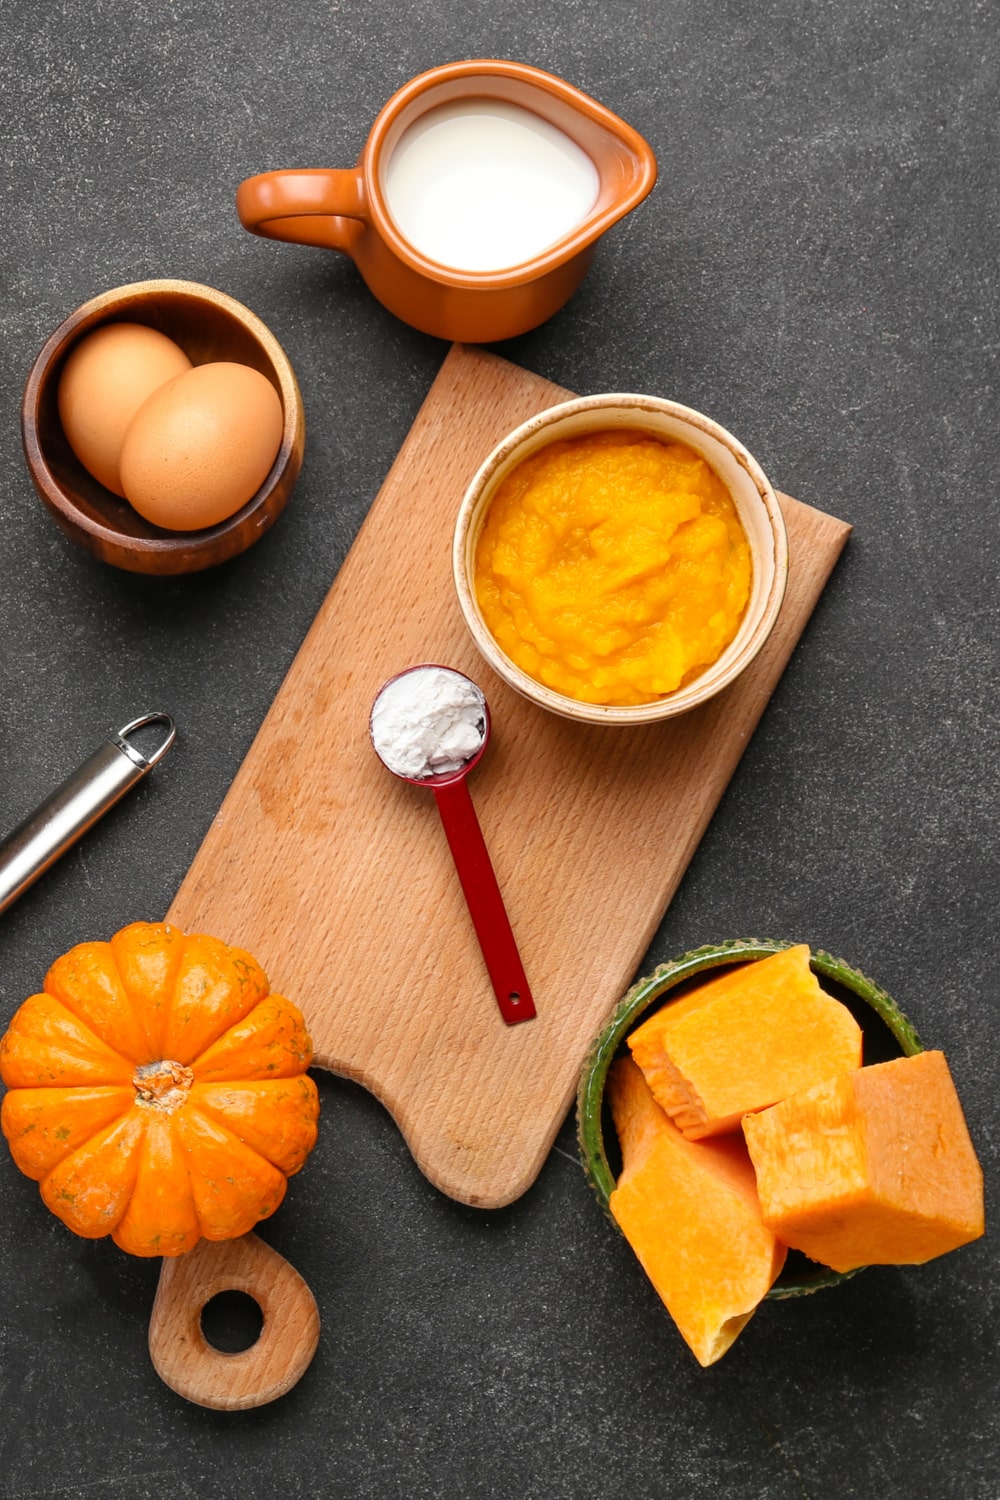 McCormick Pumpkin Pie Ingredients: Milk, Eggs and Pumpkin Puree